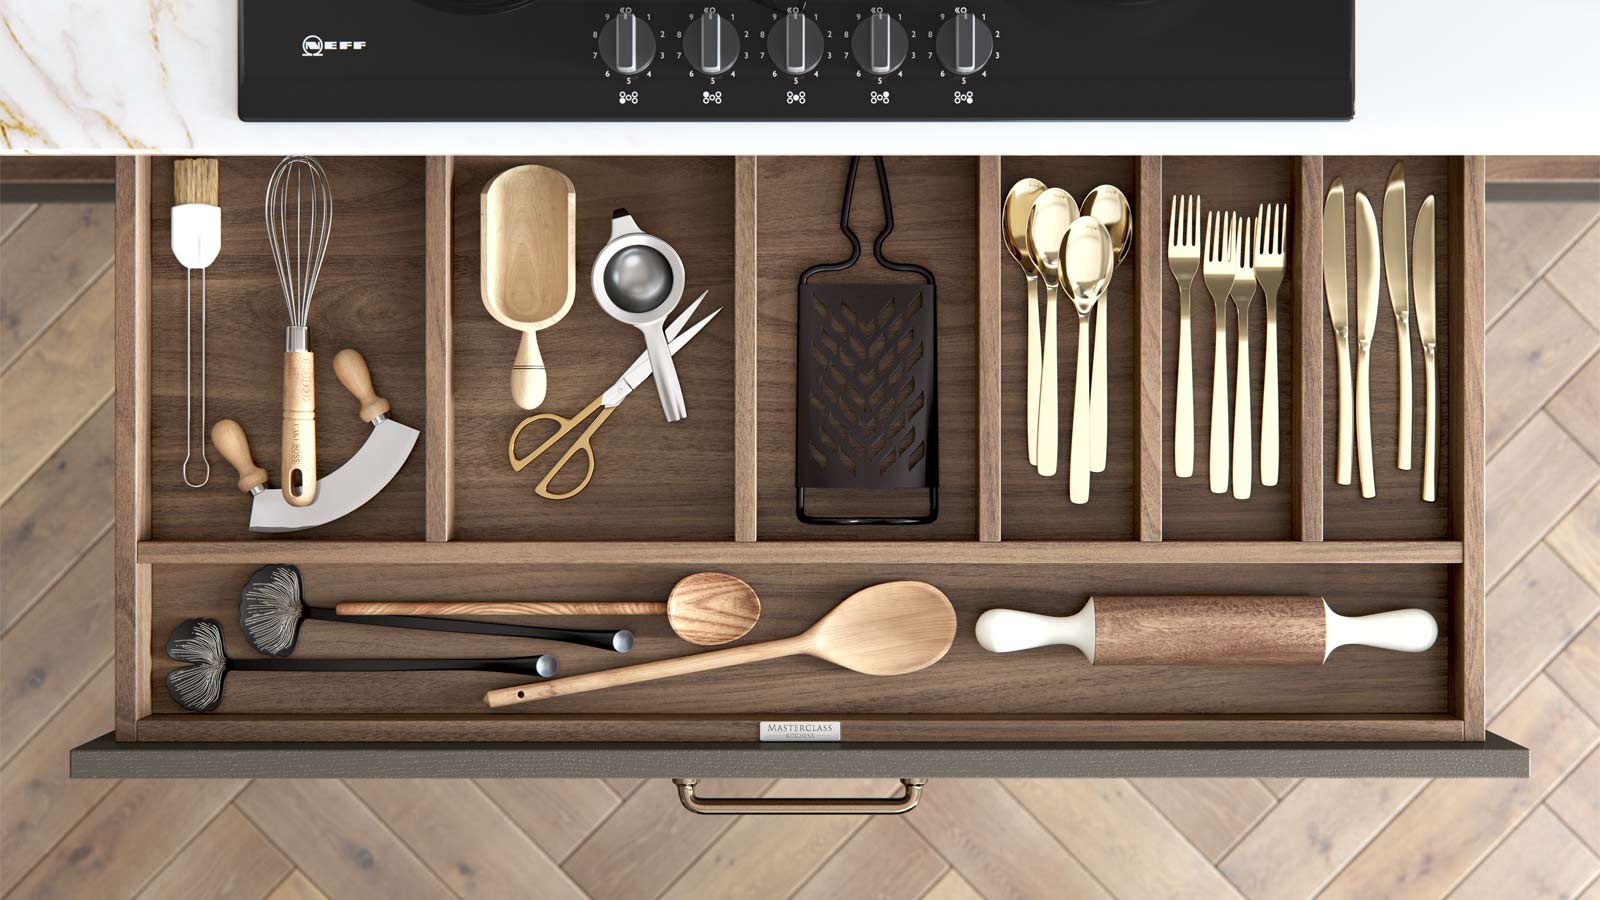 An all-wood-effect Walnut kitchen drawer with luxury utensils